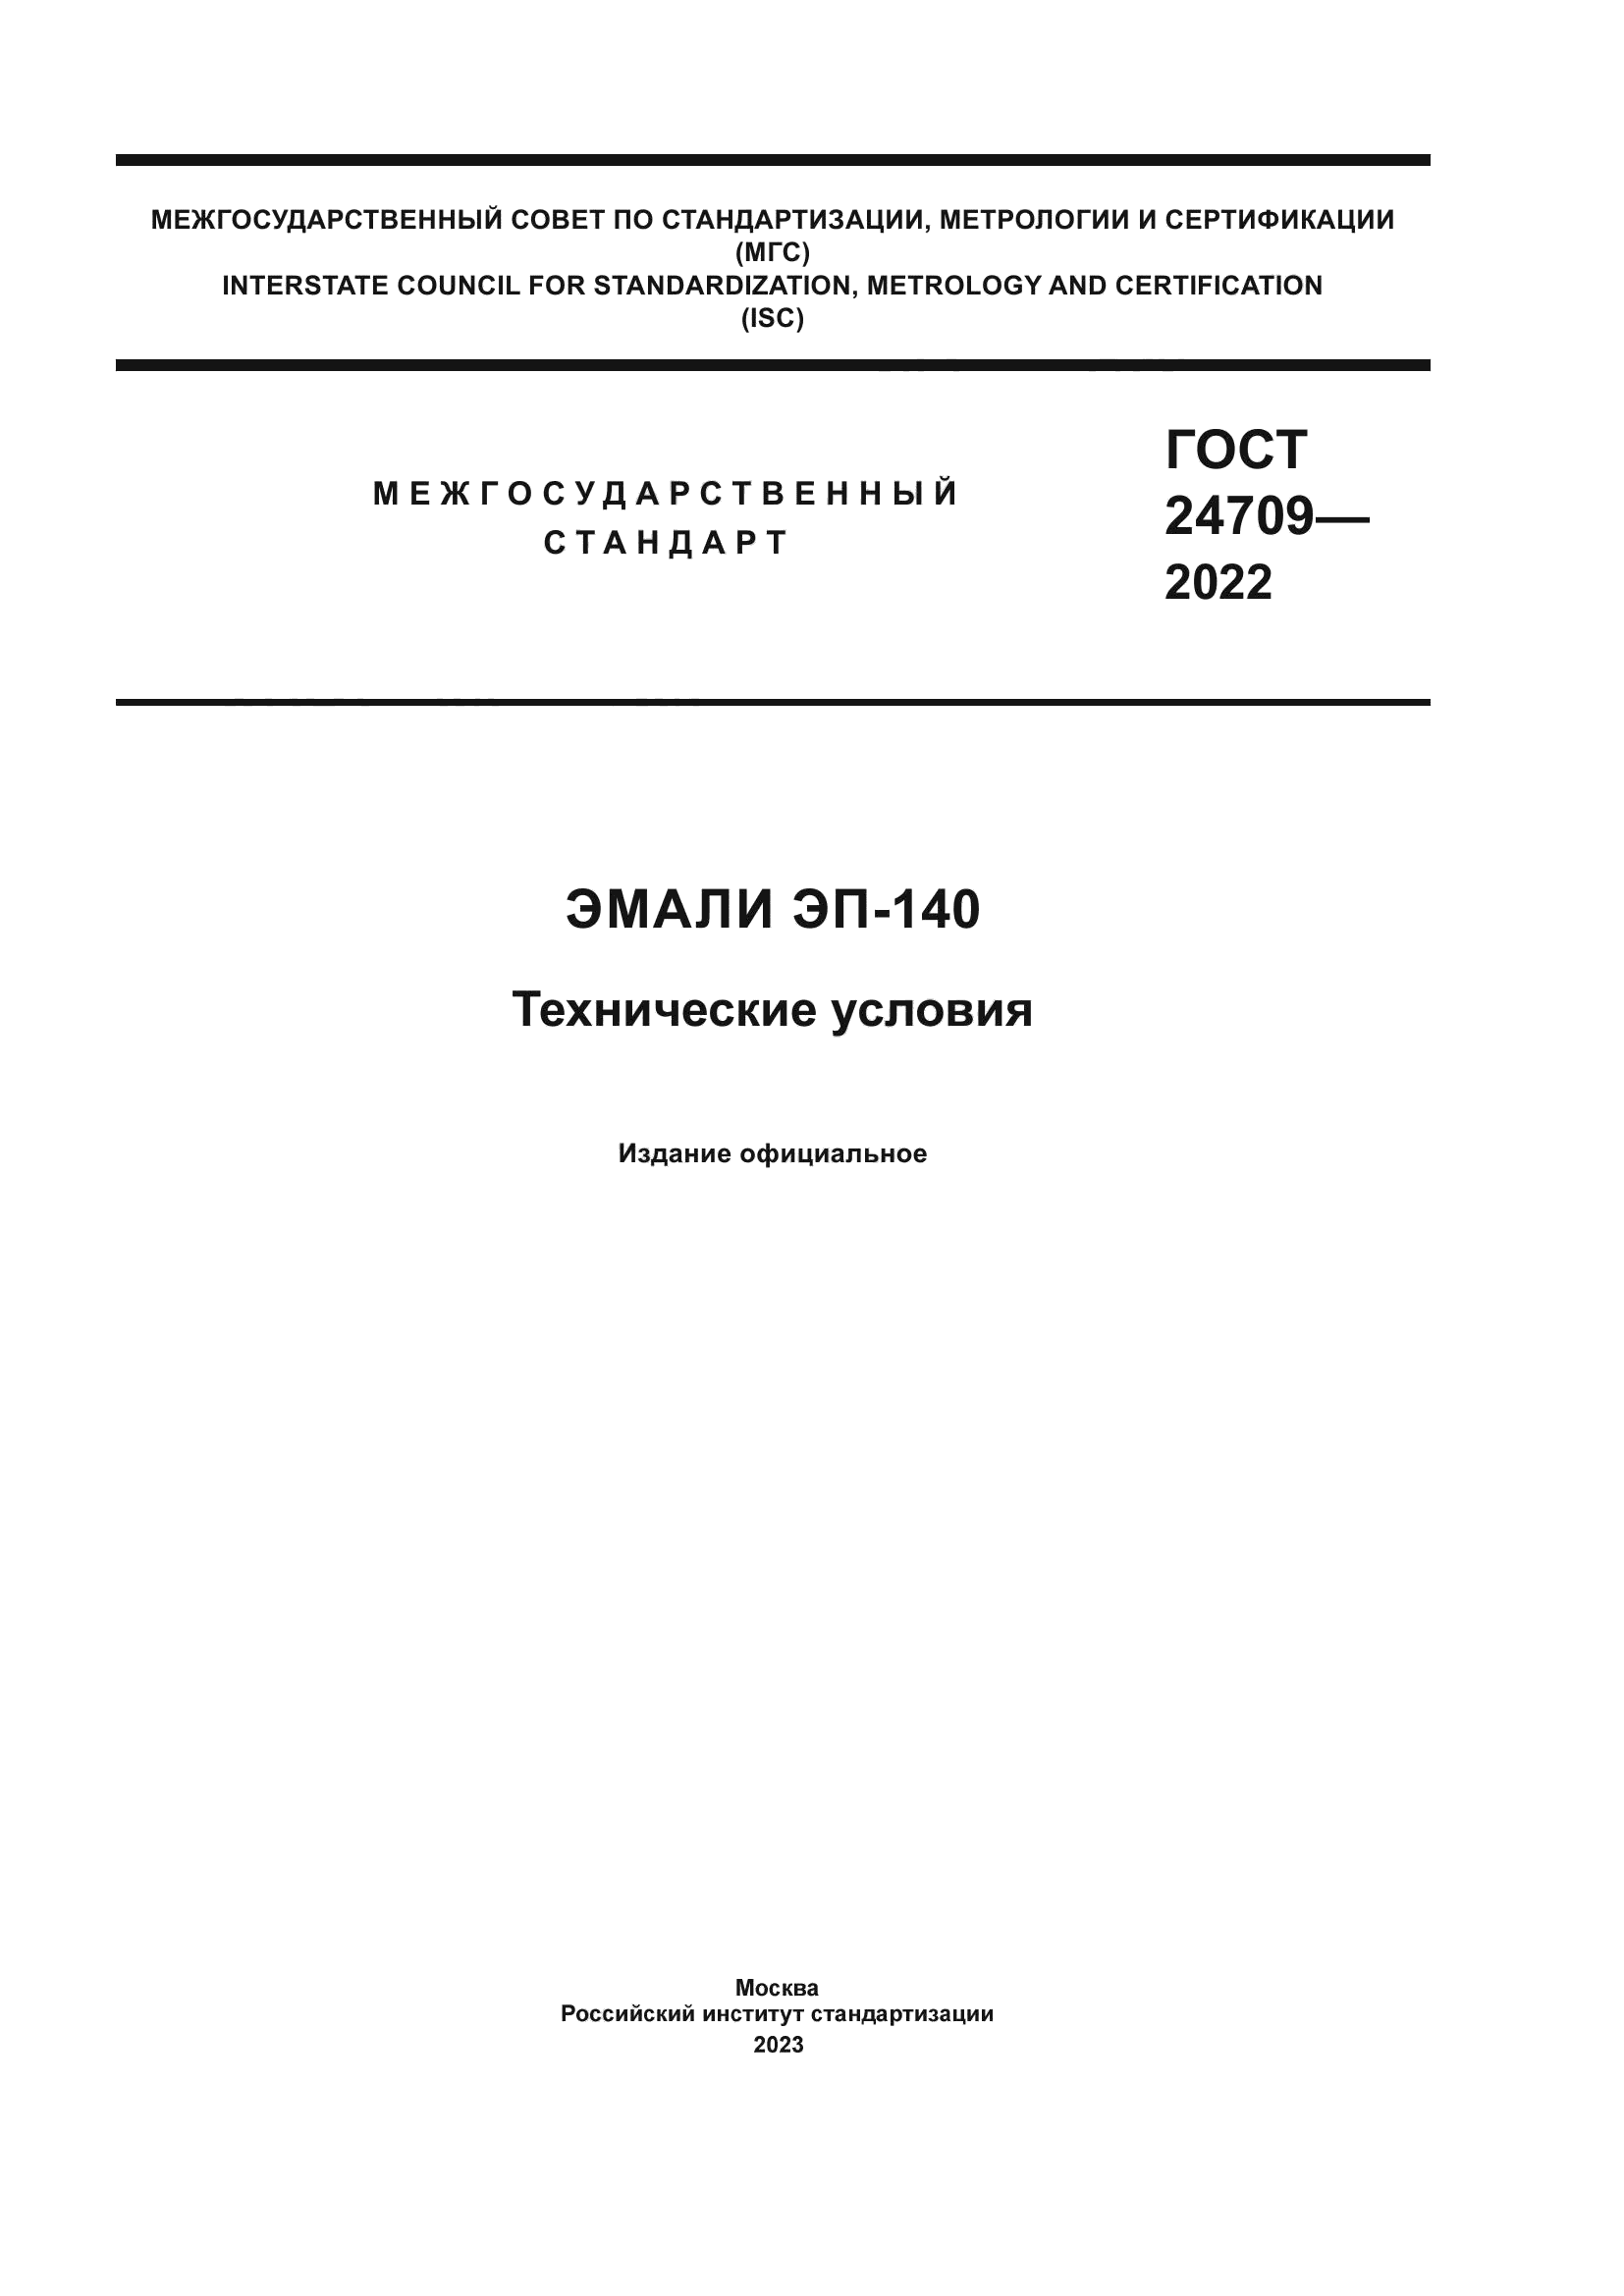 ГОСТ 24709-2022